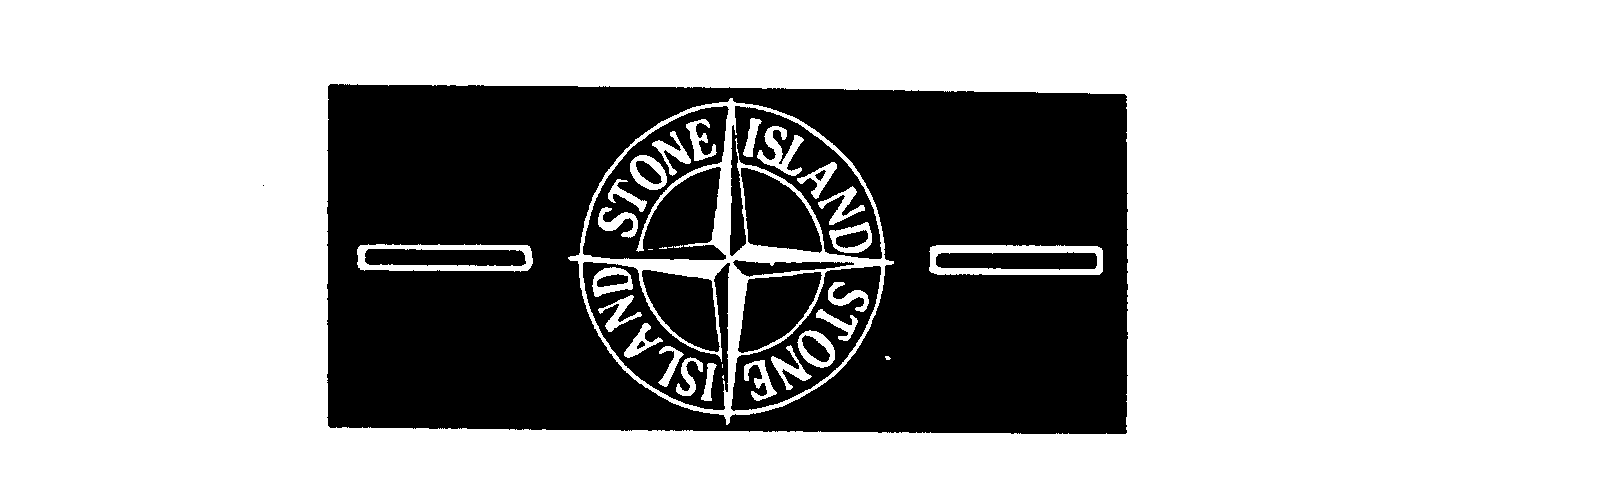 STONE ISLAND - C.p. Company S.p.a. Trademark Registration